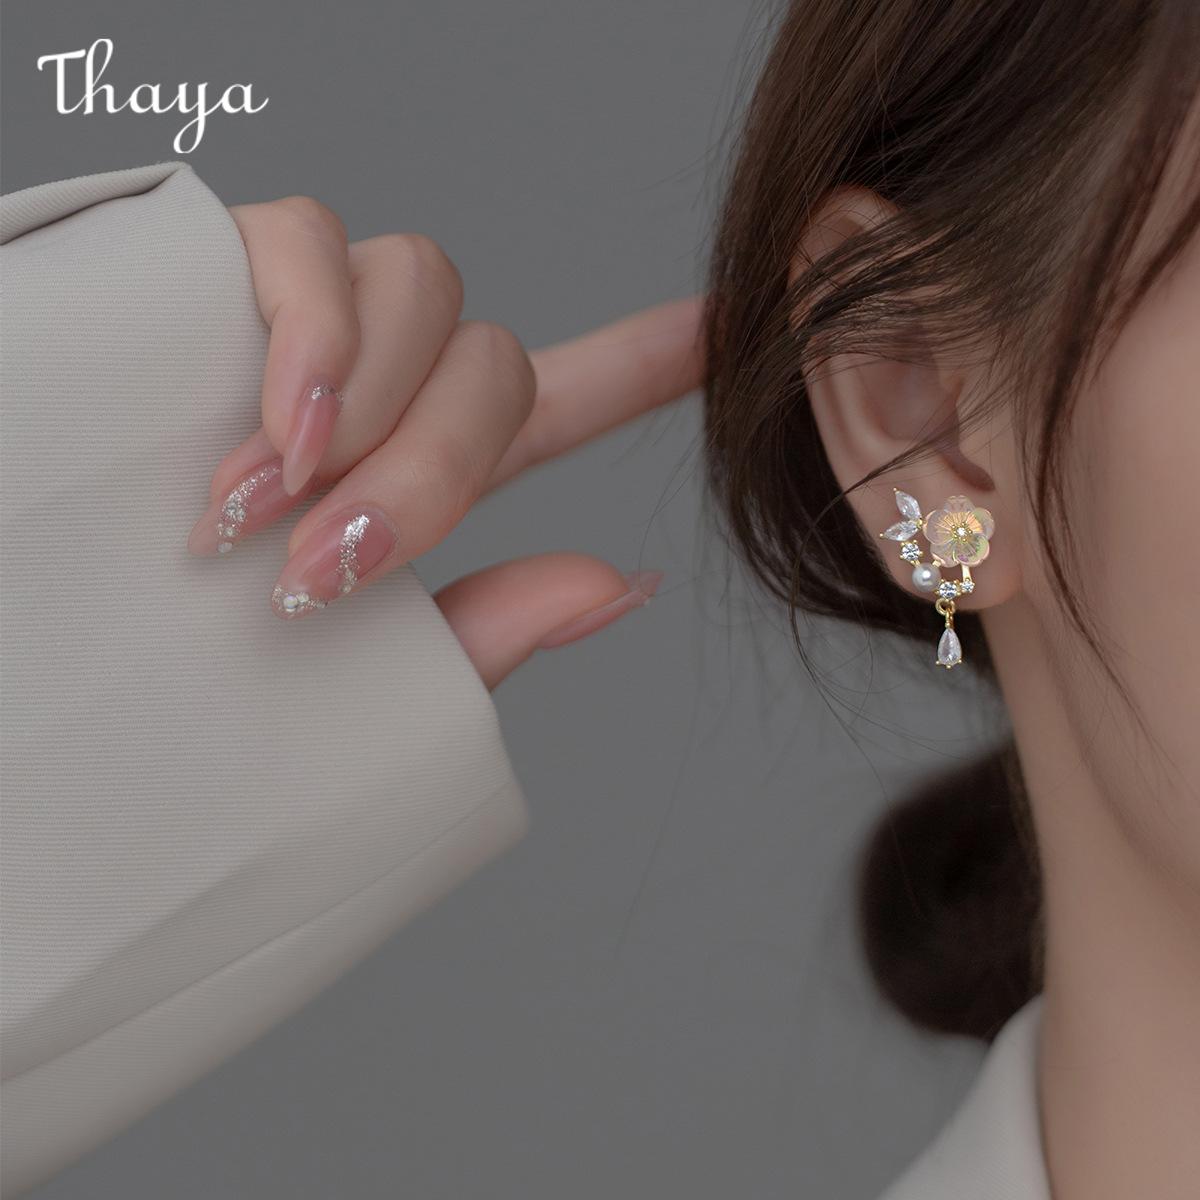 Thaya Women Earring 925 Silver Color Blossom Earring Pendant